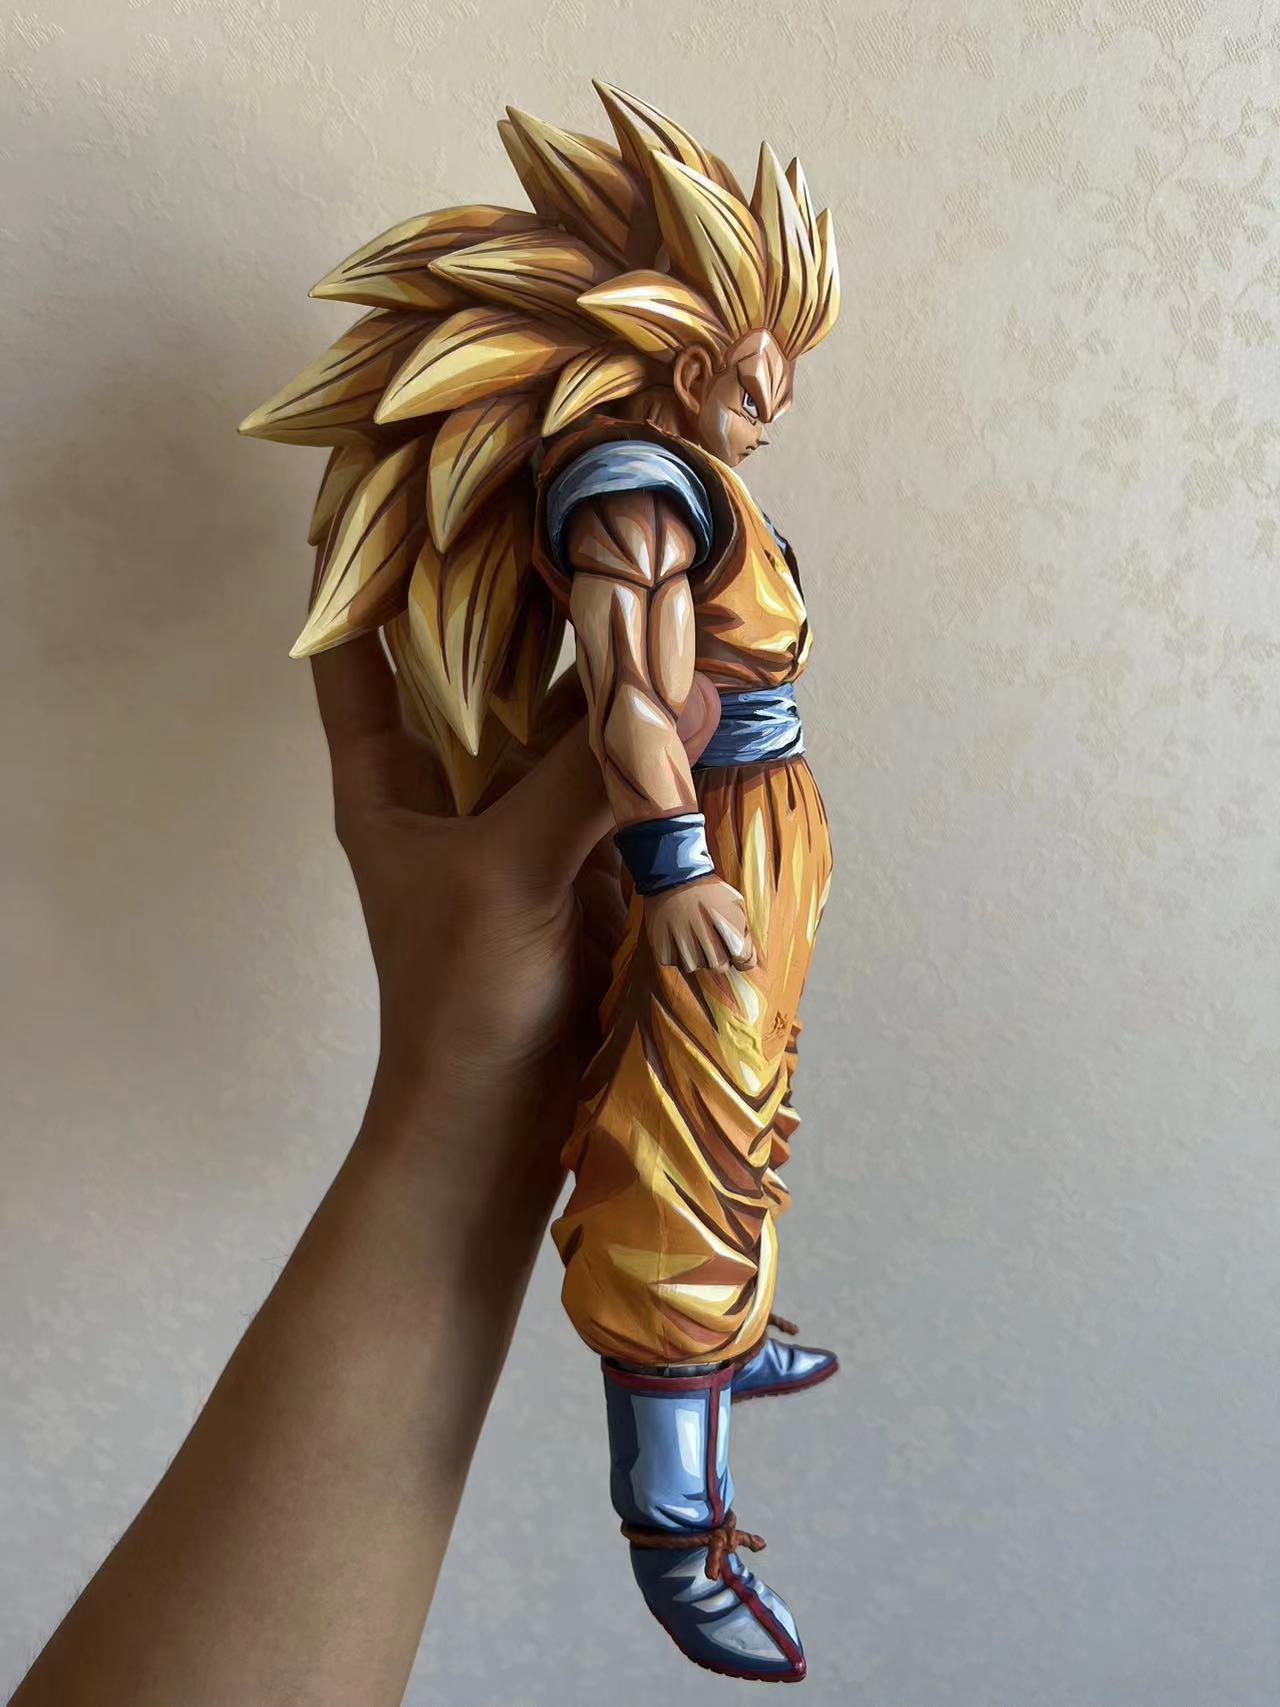 Goku Super Saiyan 4 | Poster